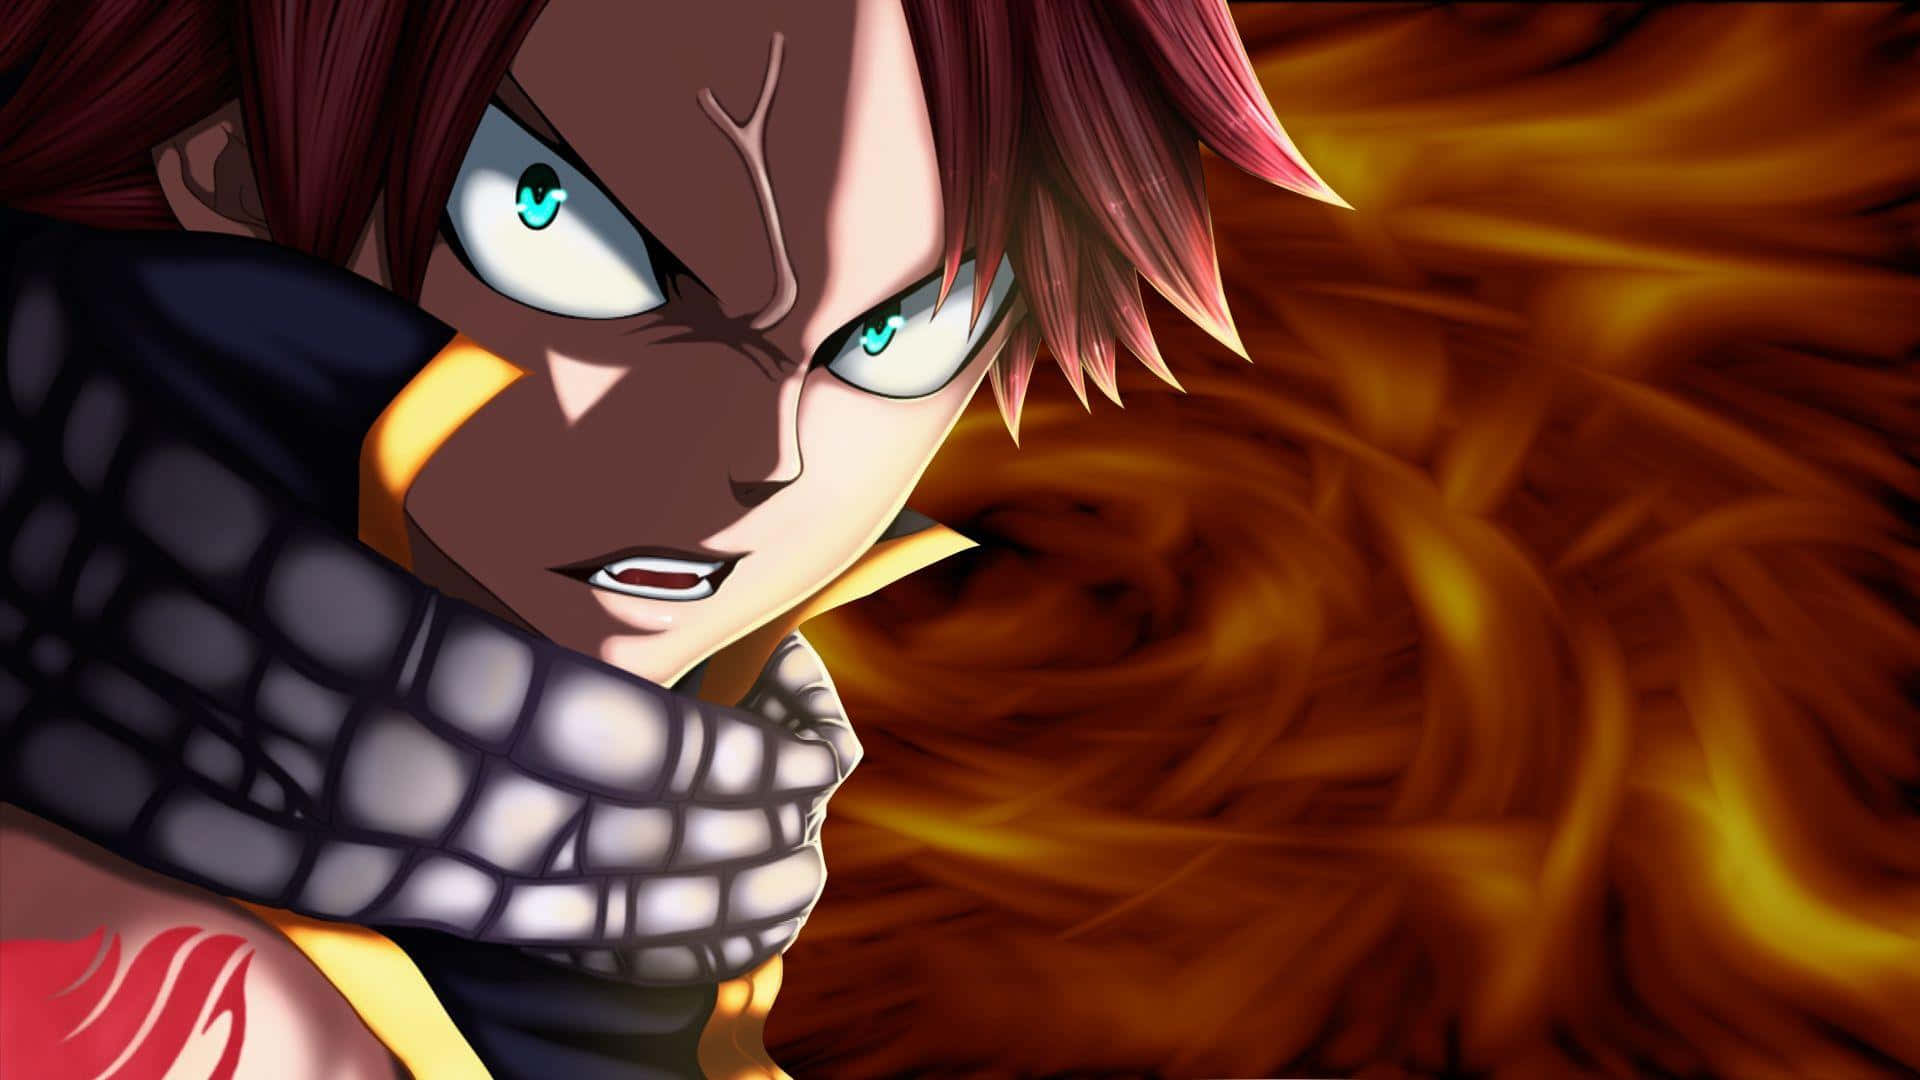 Natsu Dragneel - The Fire Dragon Slayer Background